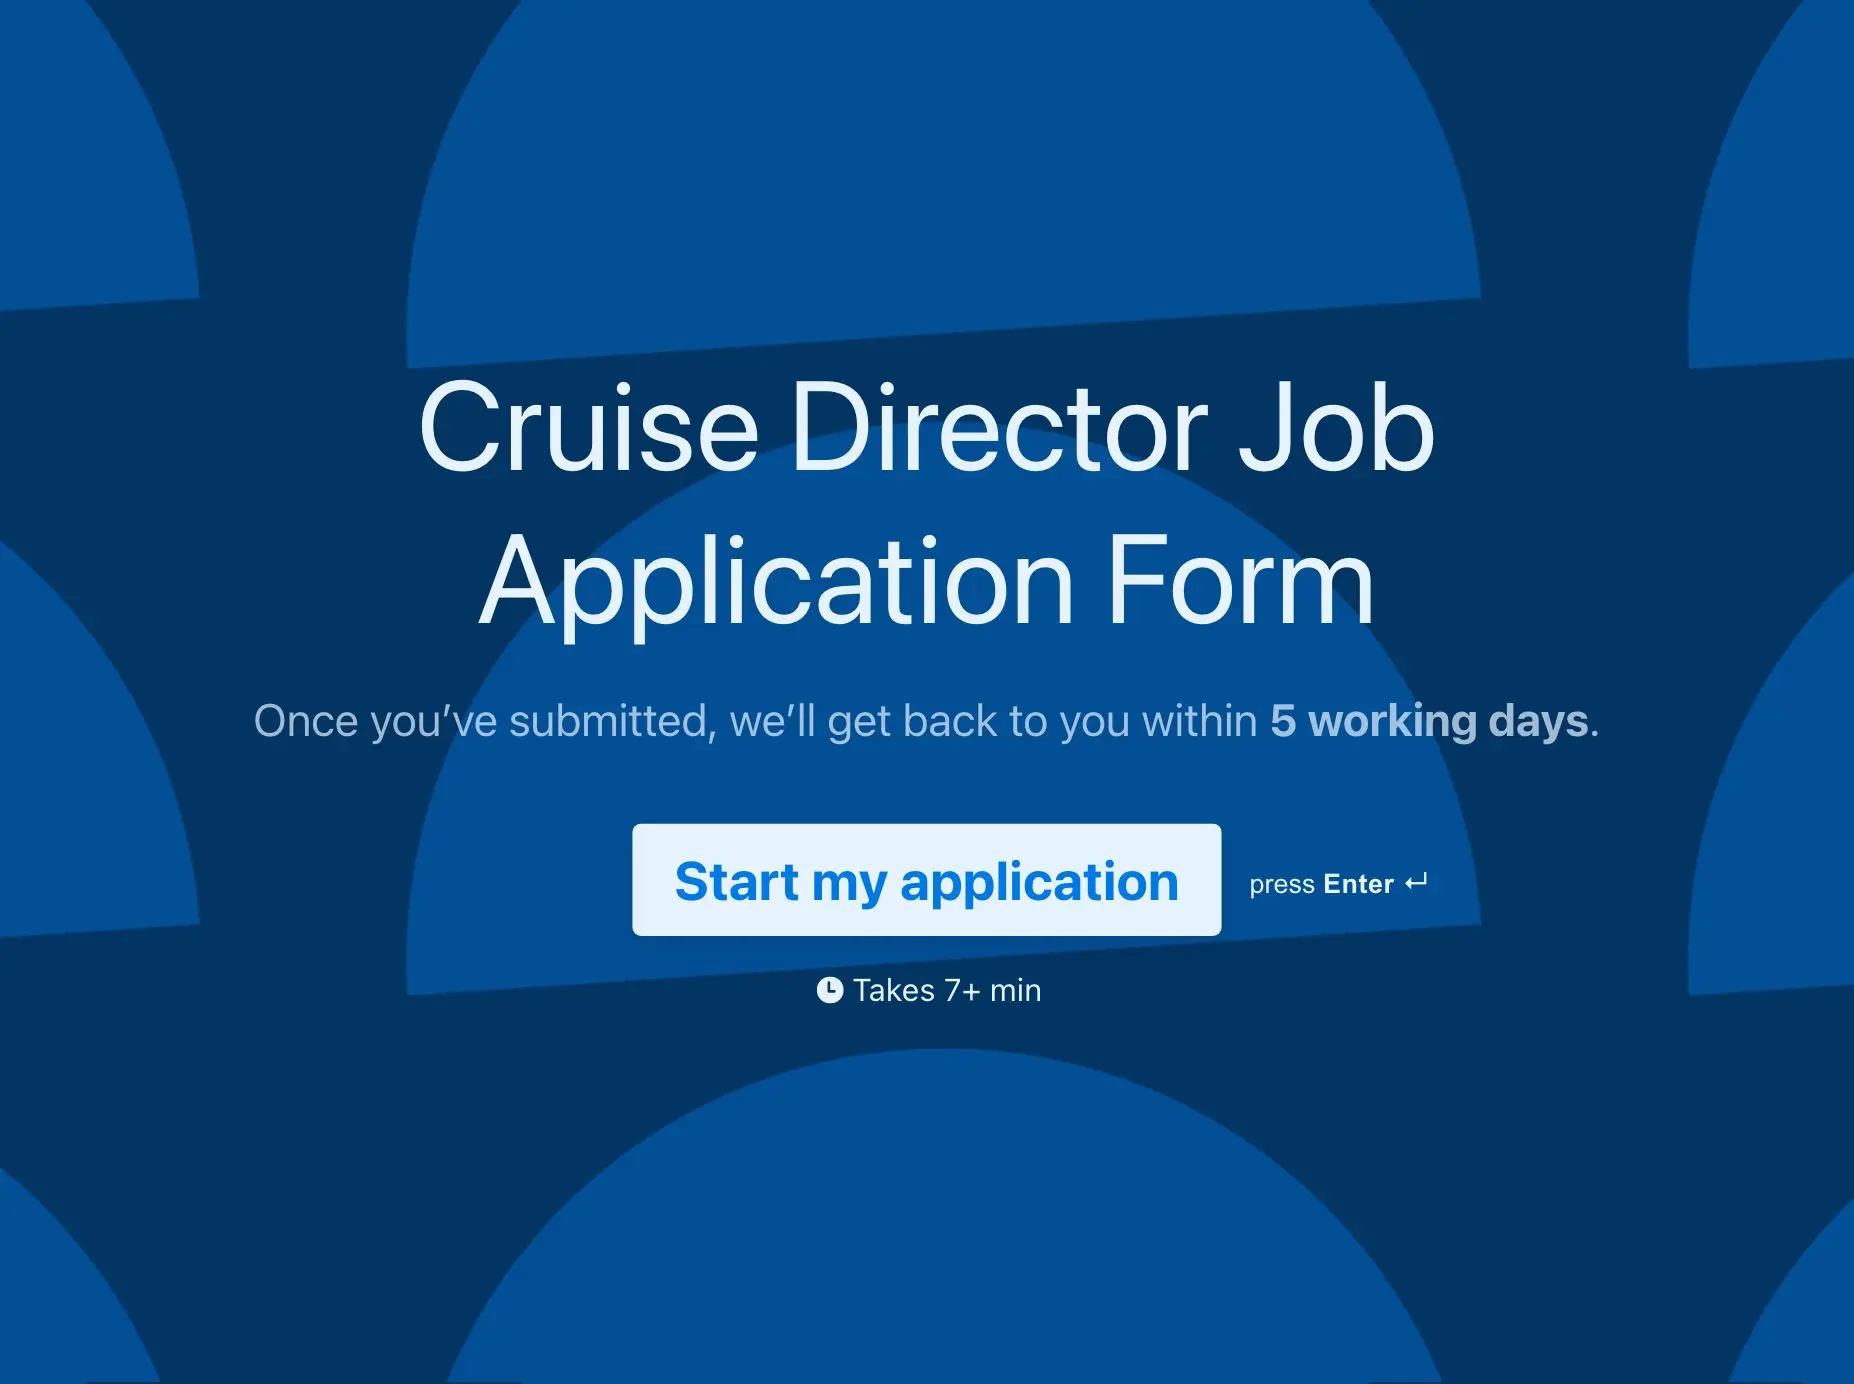 Cruise Director Job Application Form Template Hero